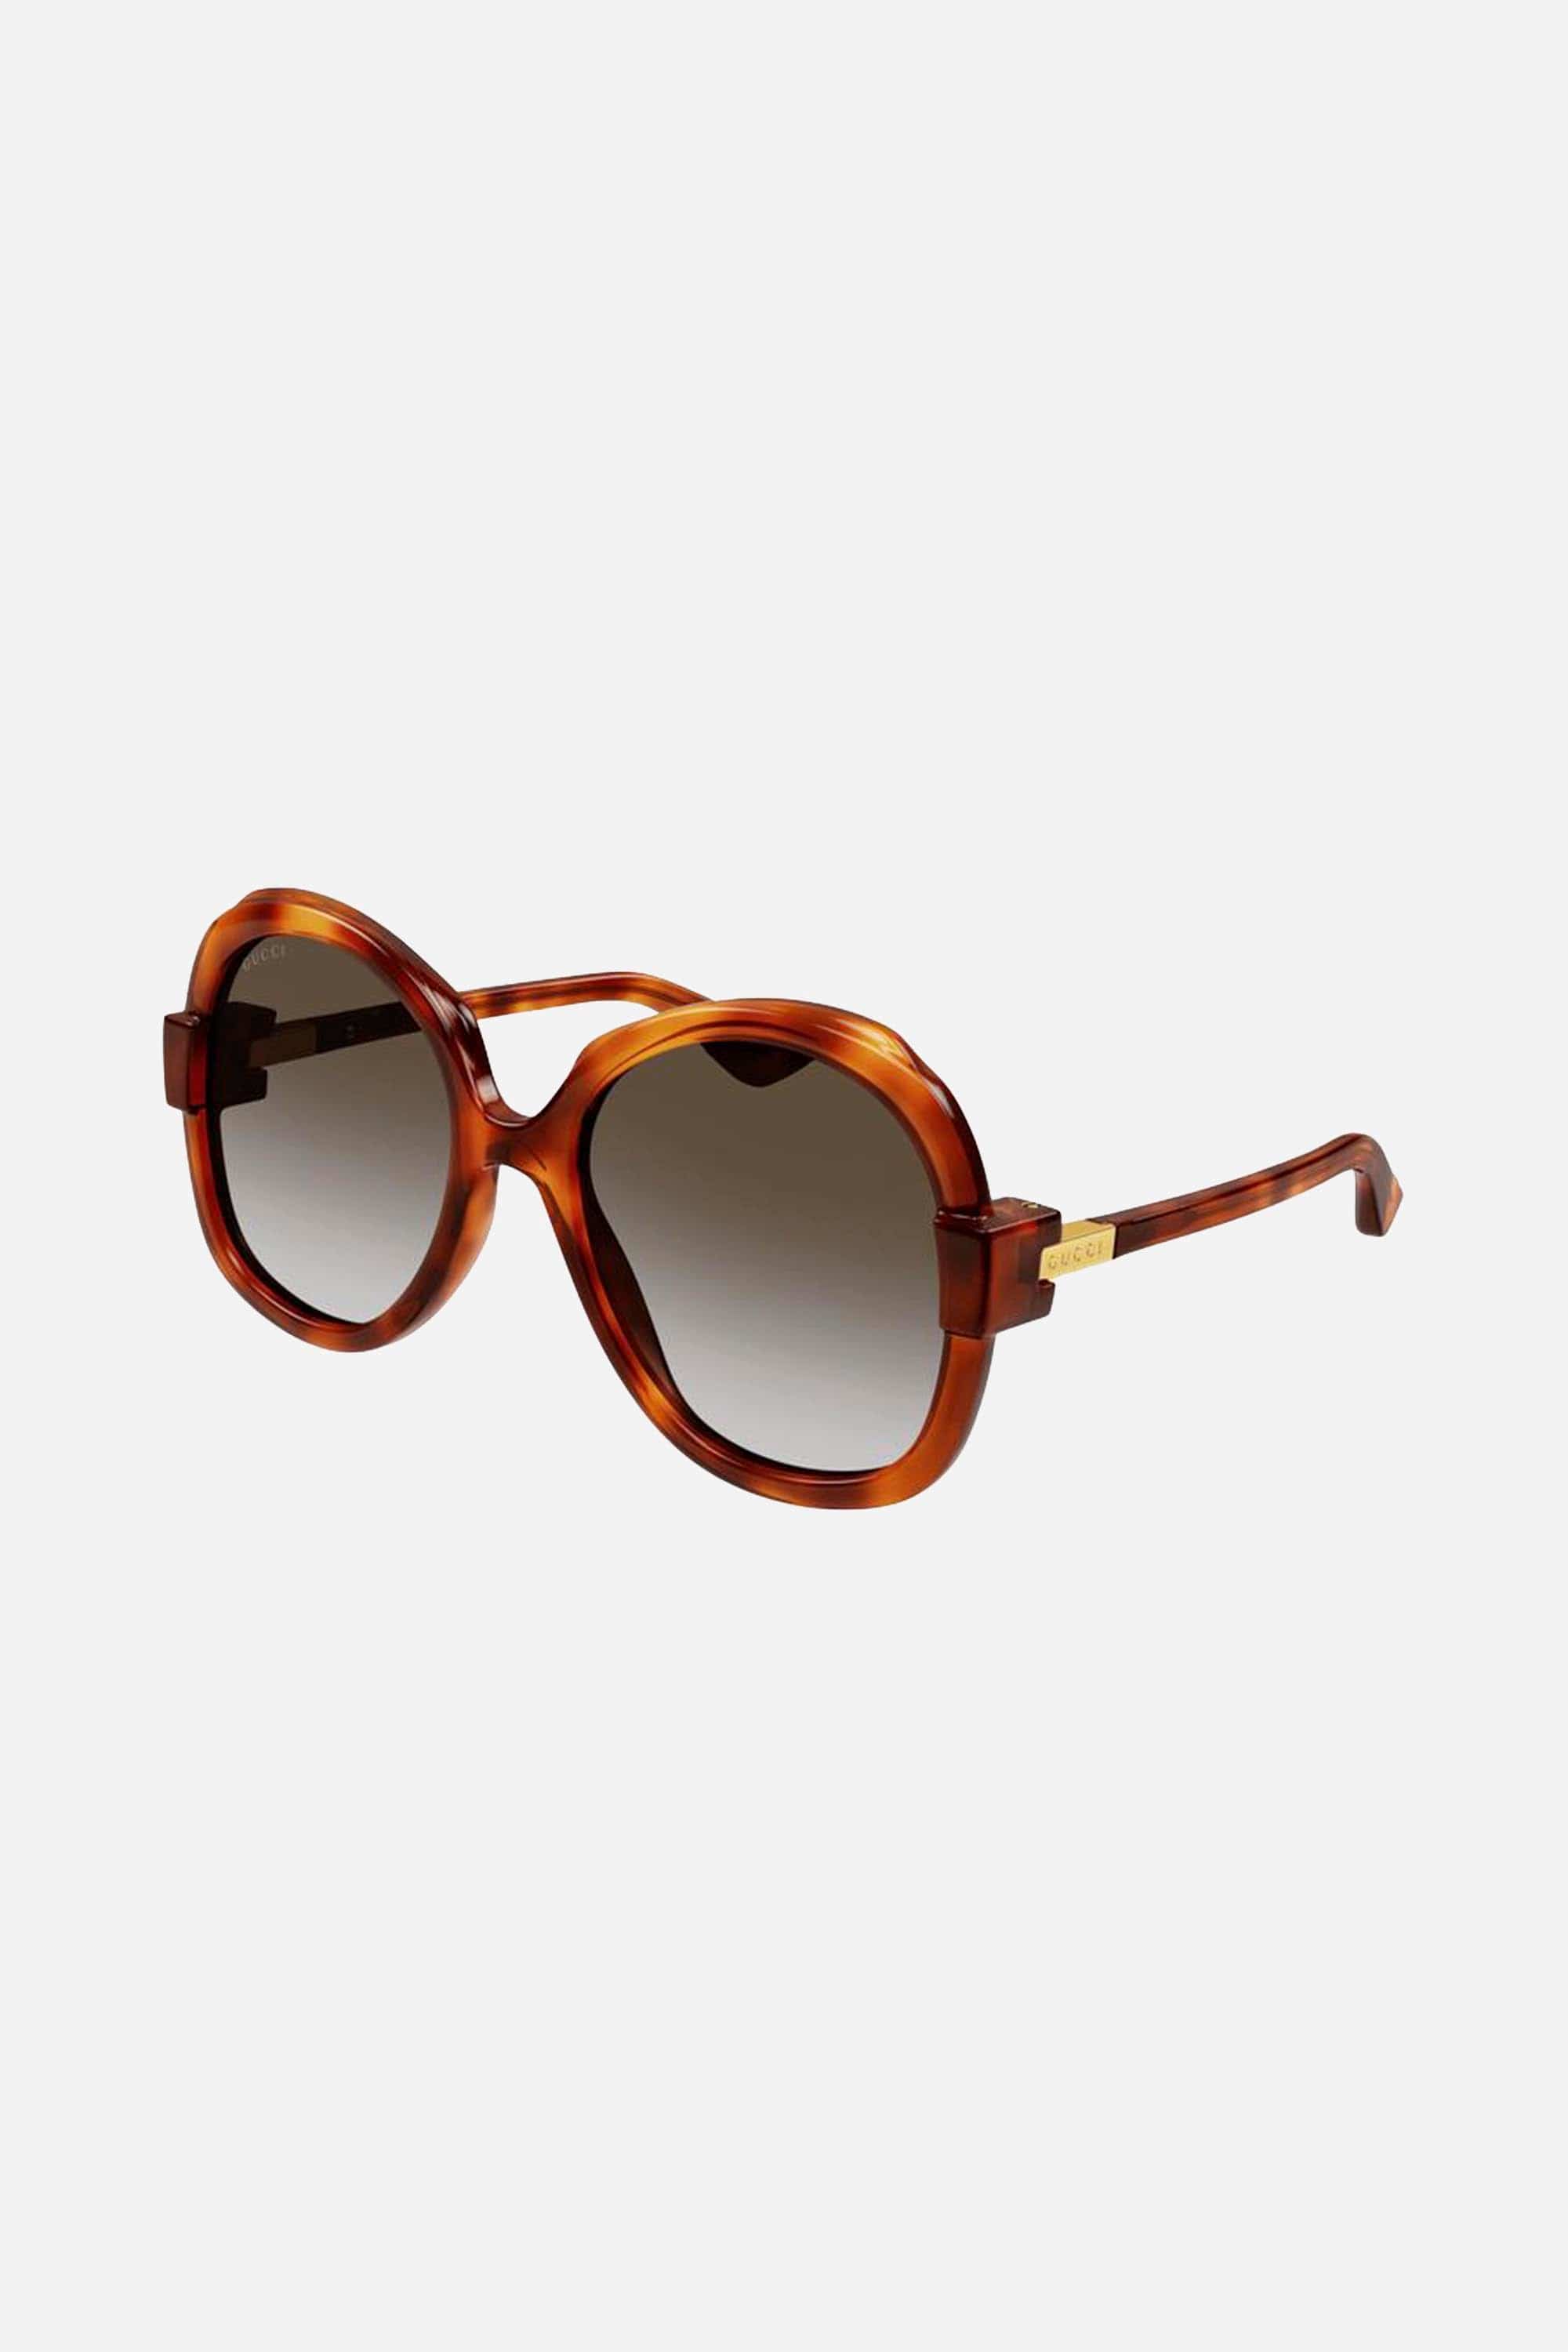 Gucci havana round shape sunglasses - Eyewear Club